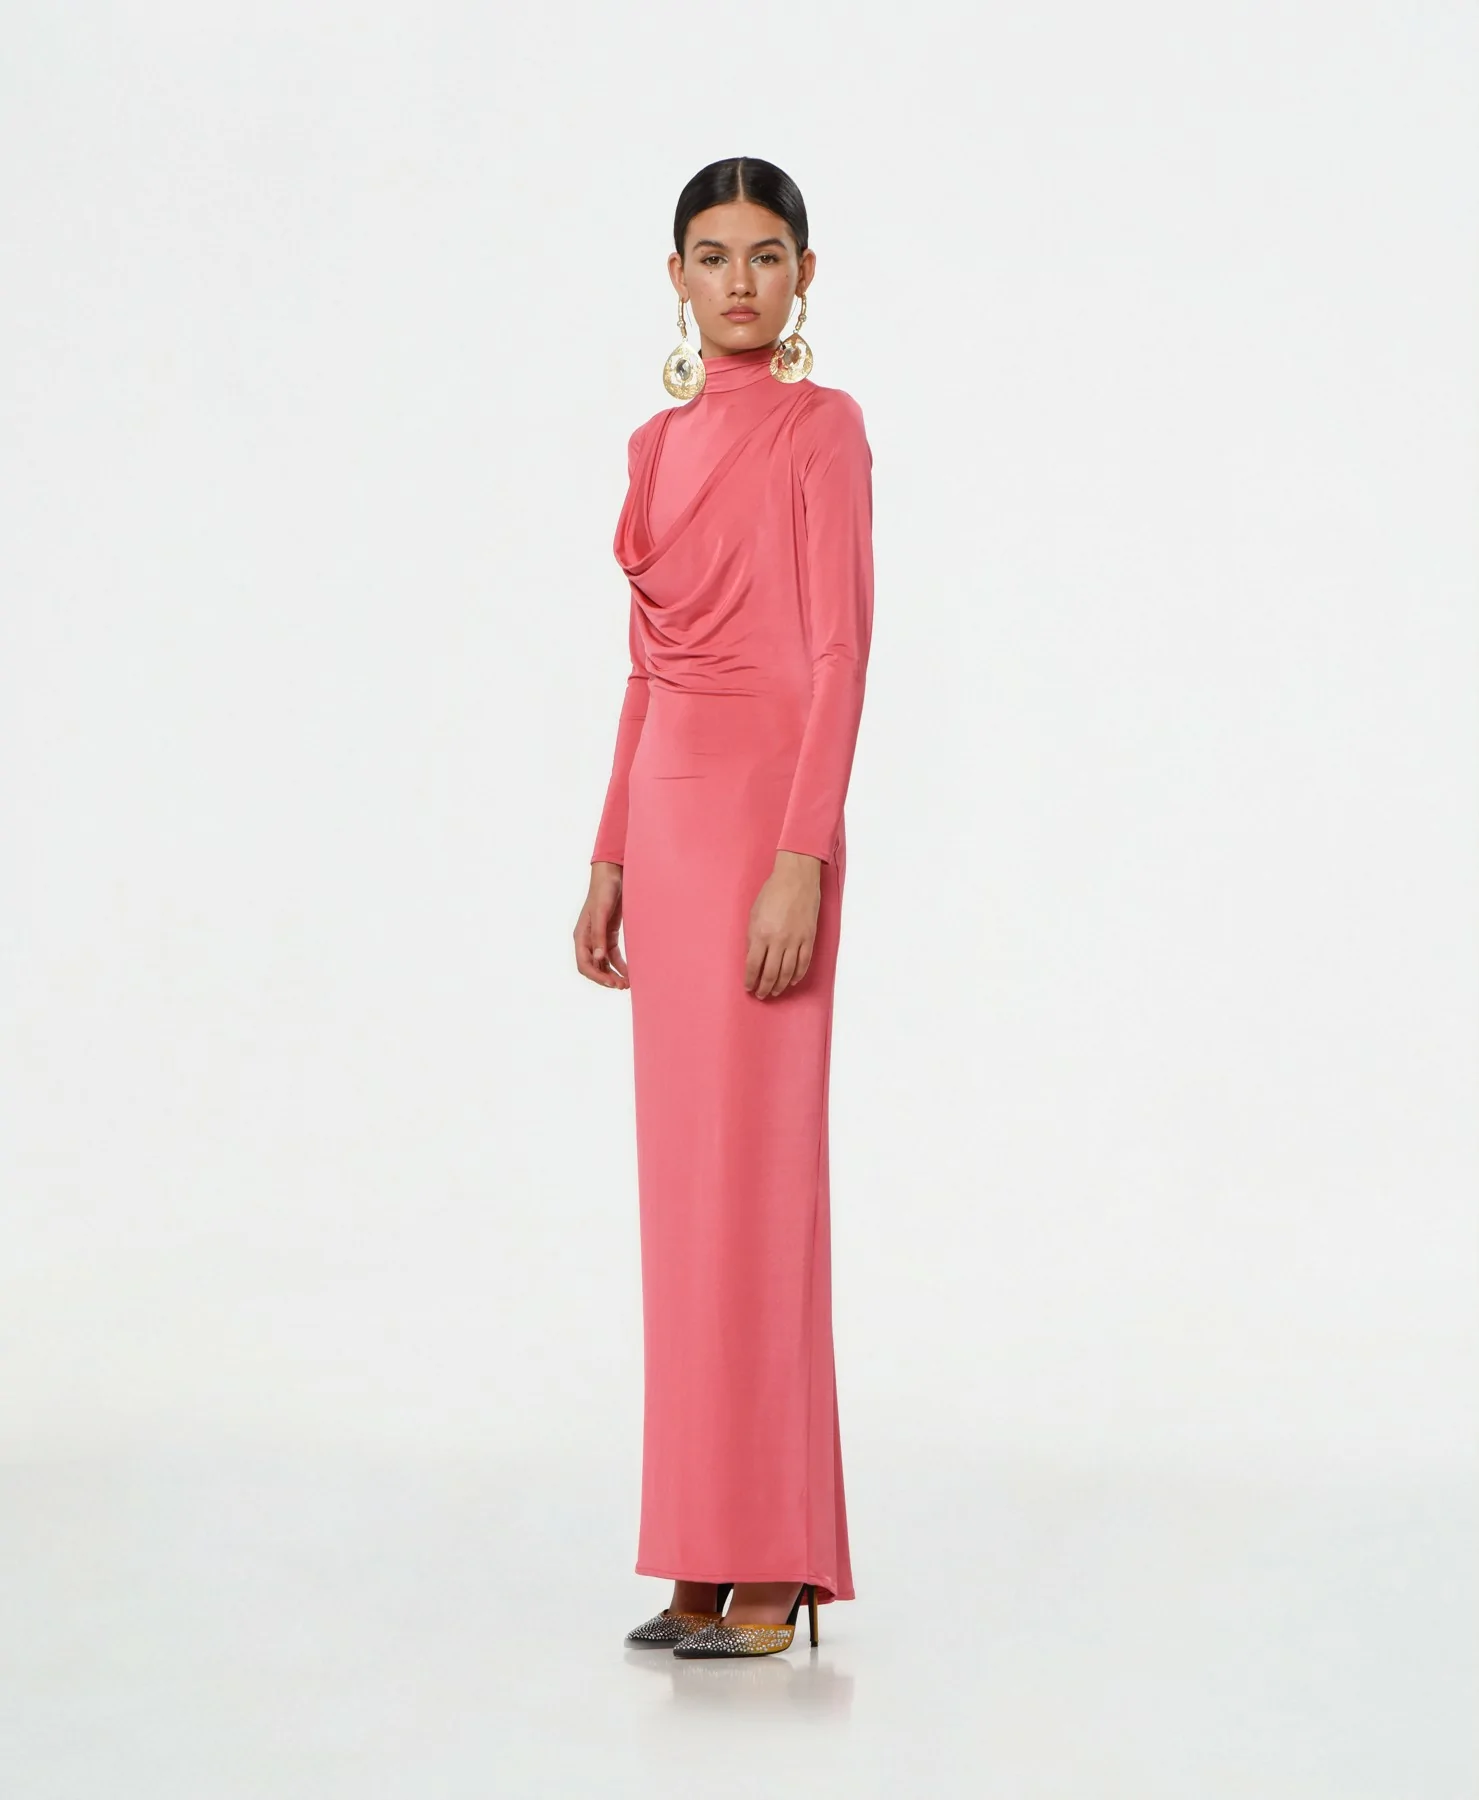 Vestido Largo Rosa Tucana de C L A R O Couture, con escote fruncido y manga larga, ideal para bodas de otoño.